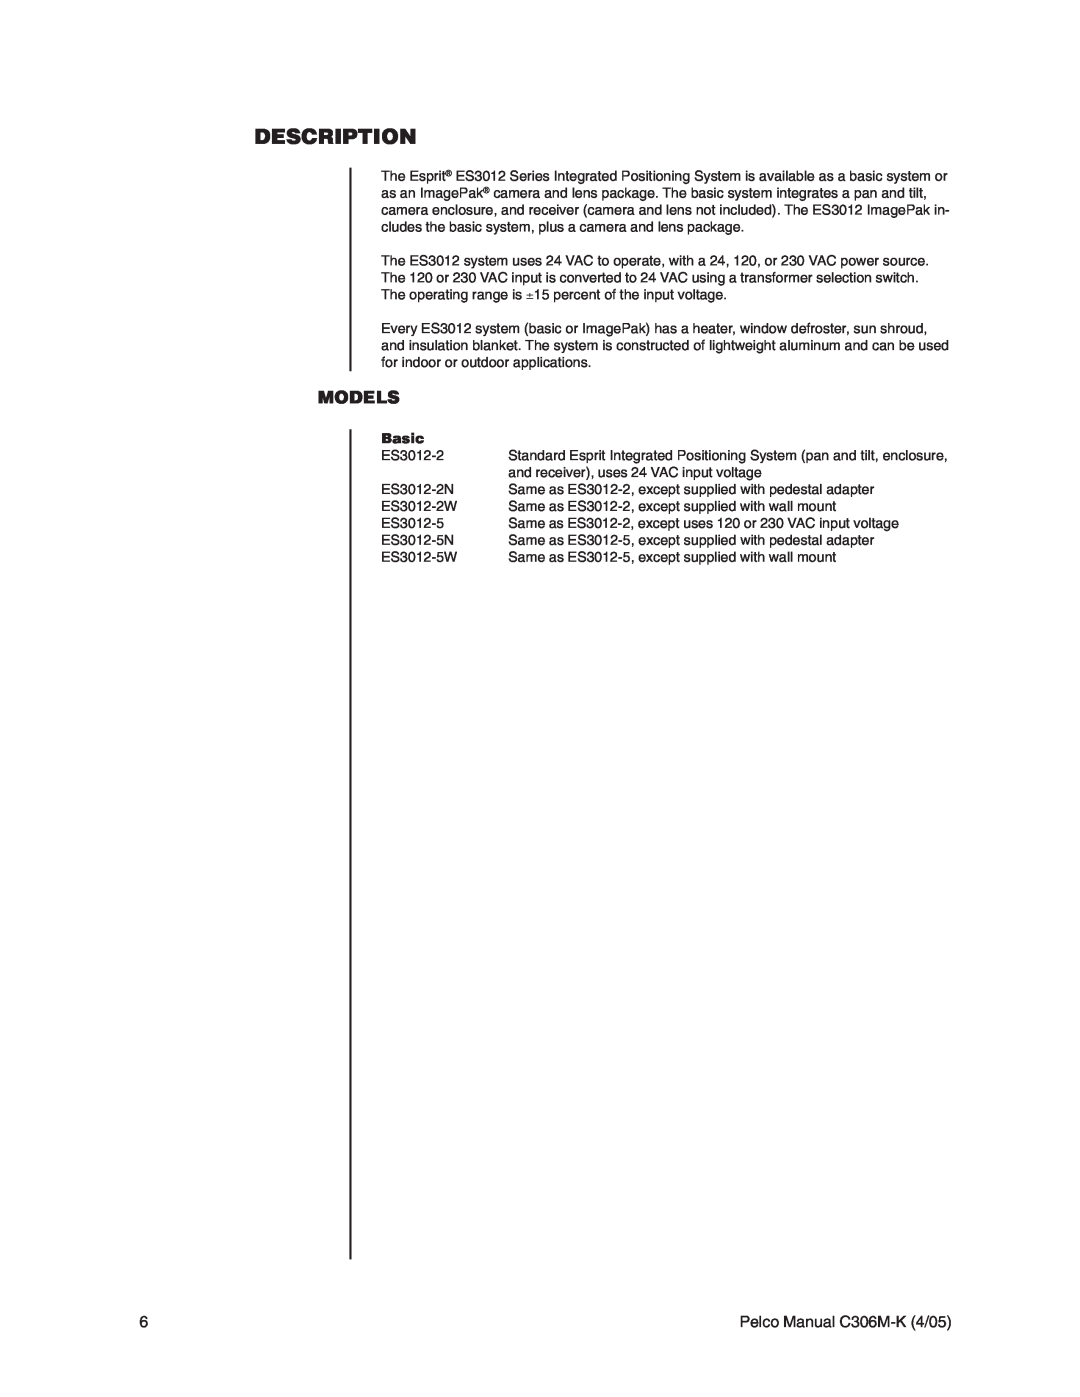 Pelco es3012 installation manual Description, Models, Basic 